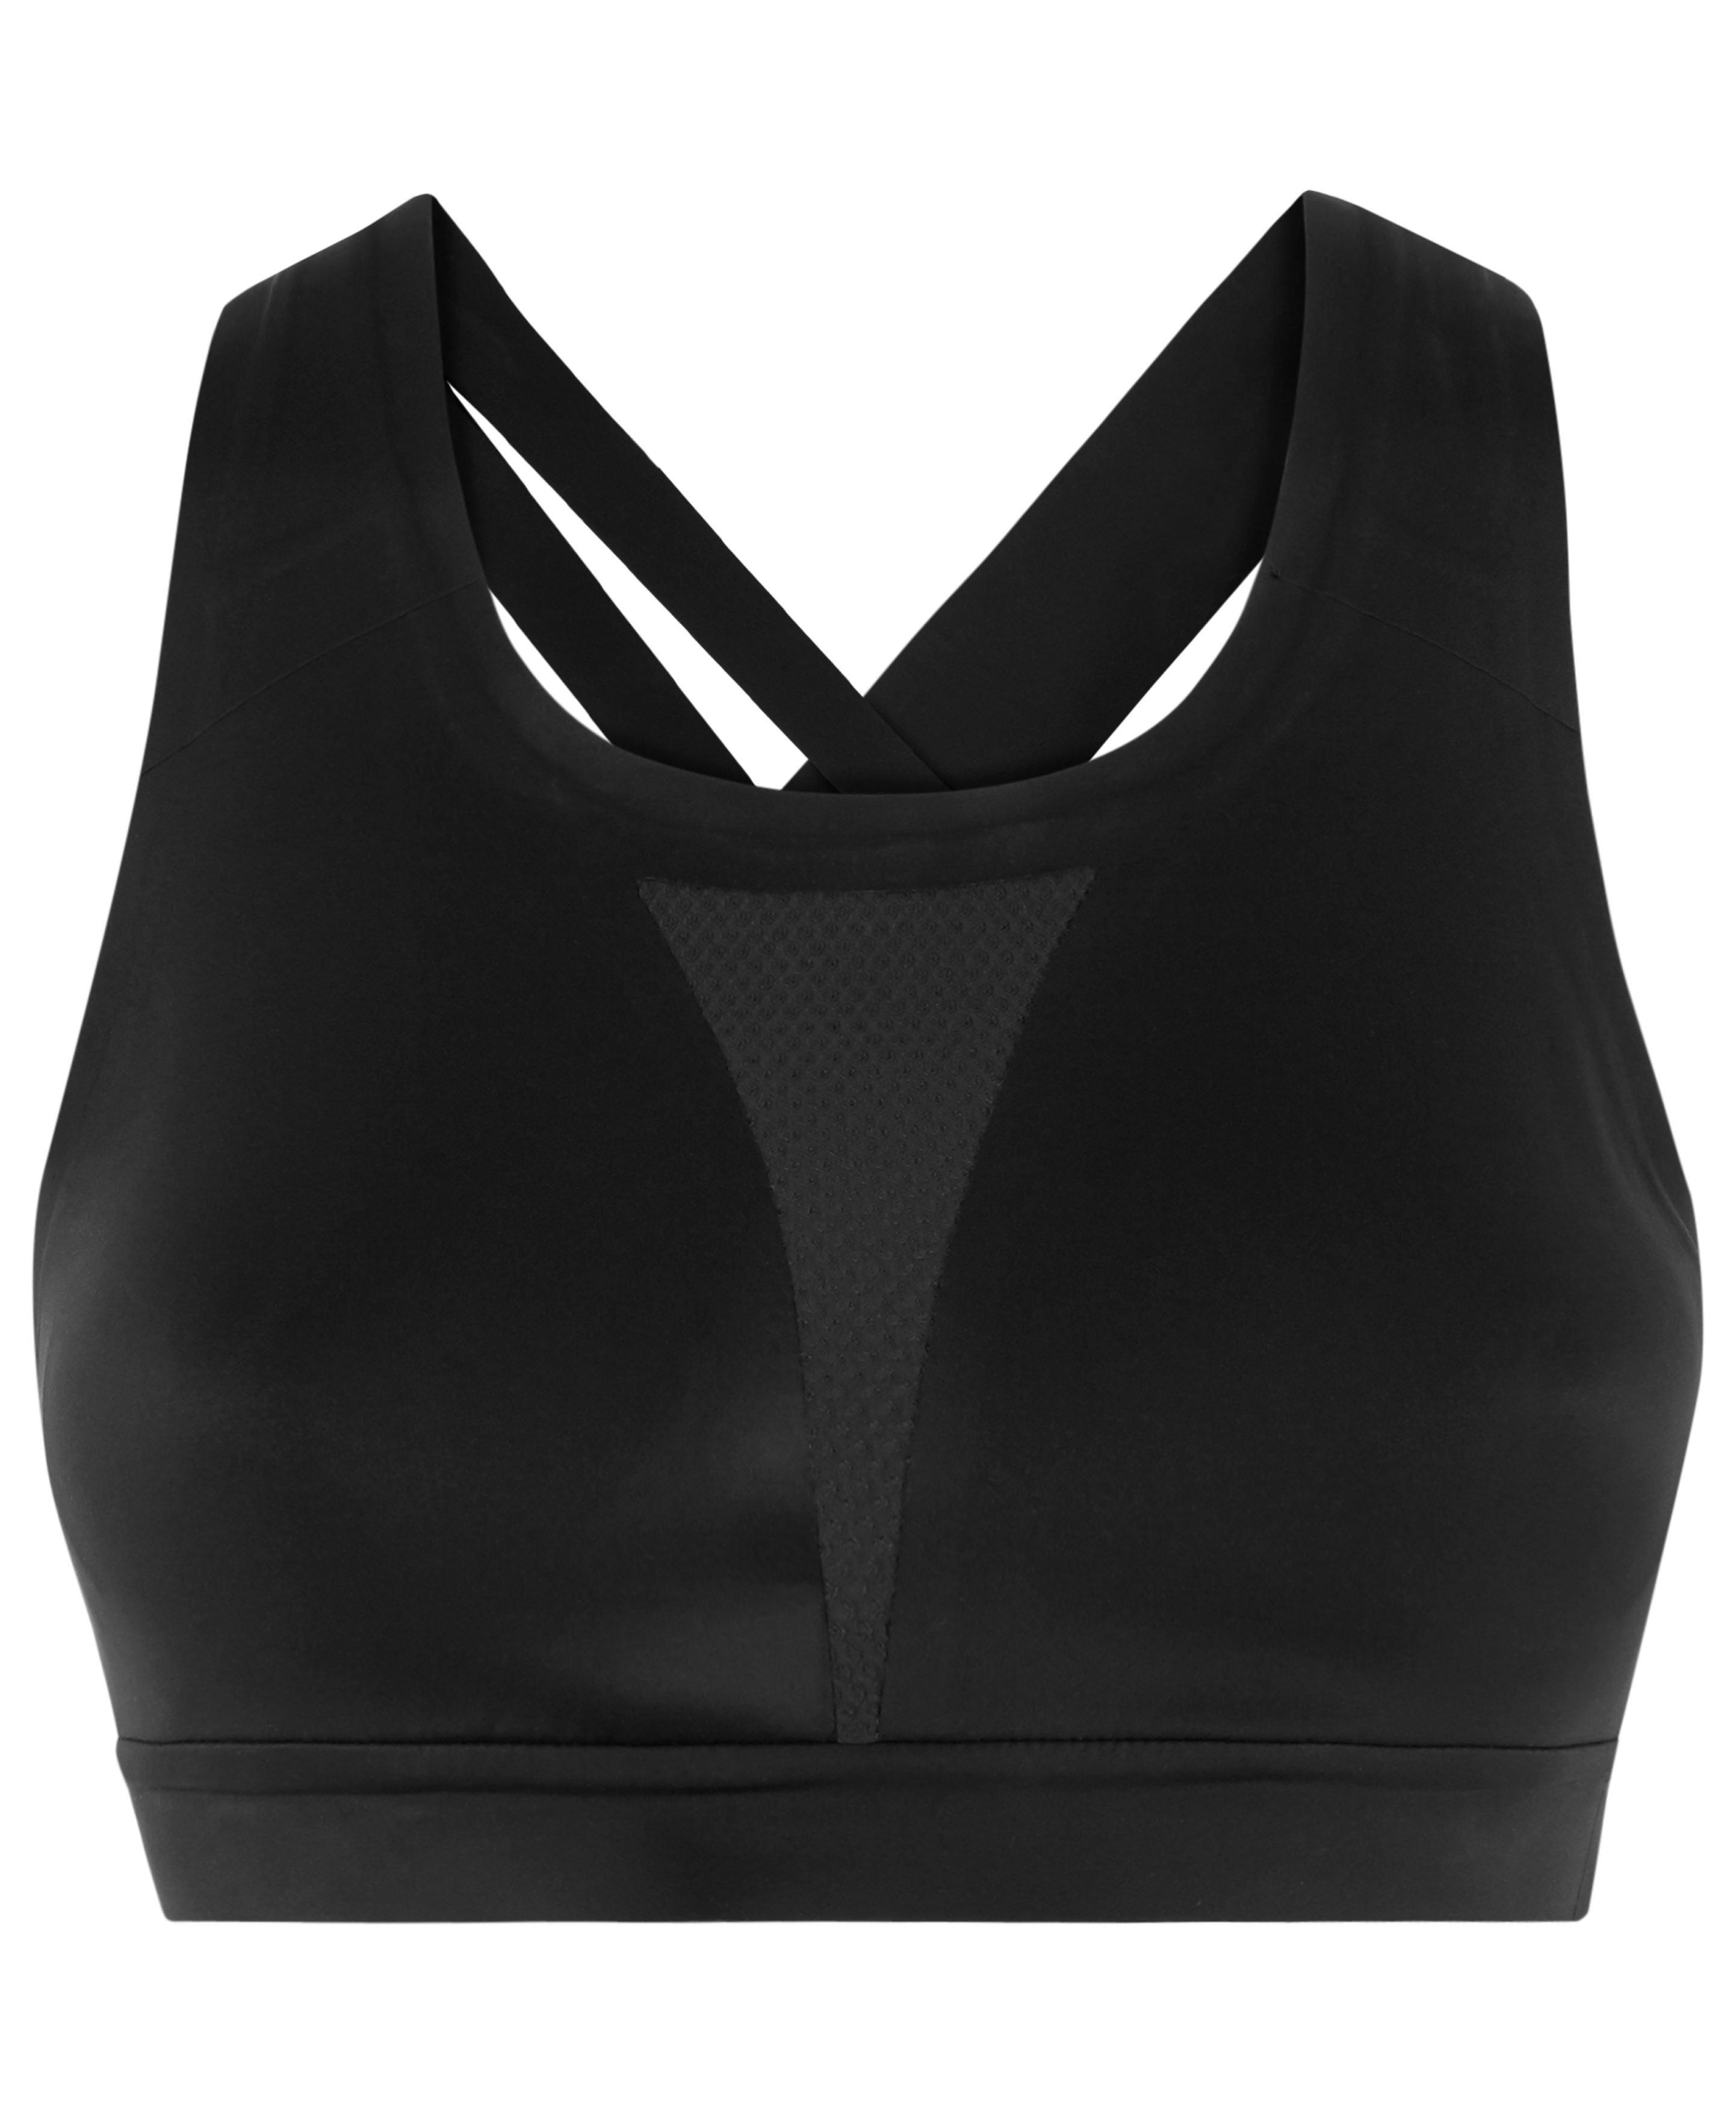 Rockwear patterned high support sports bra  High support sports bra, Black  sports bra, Sports bra shop